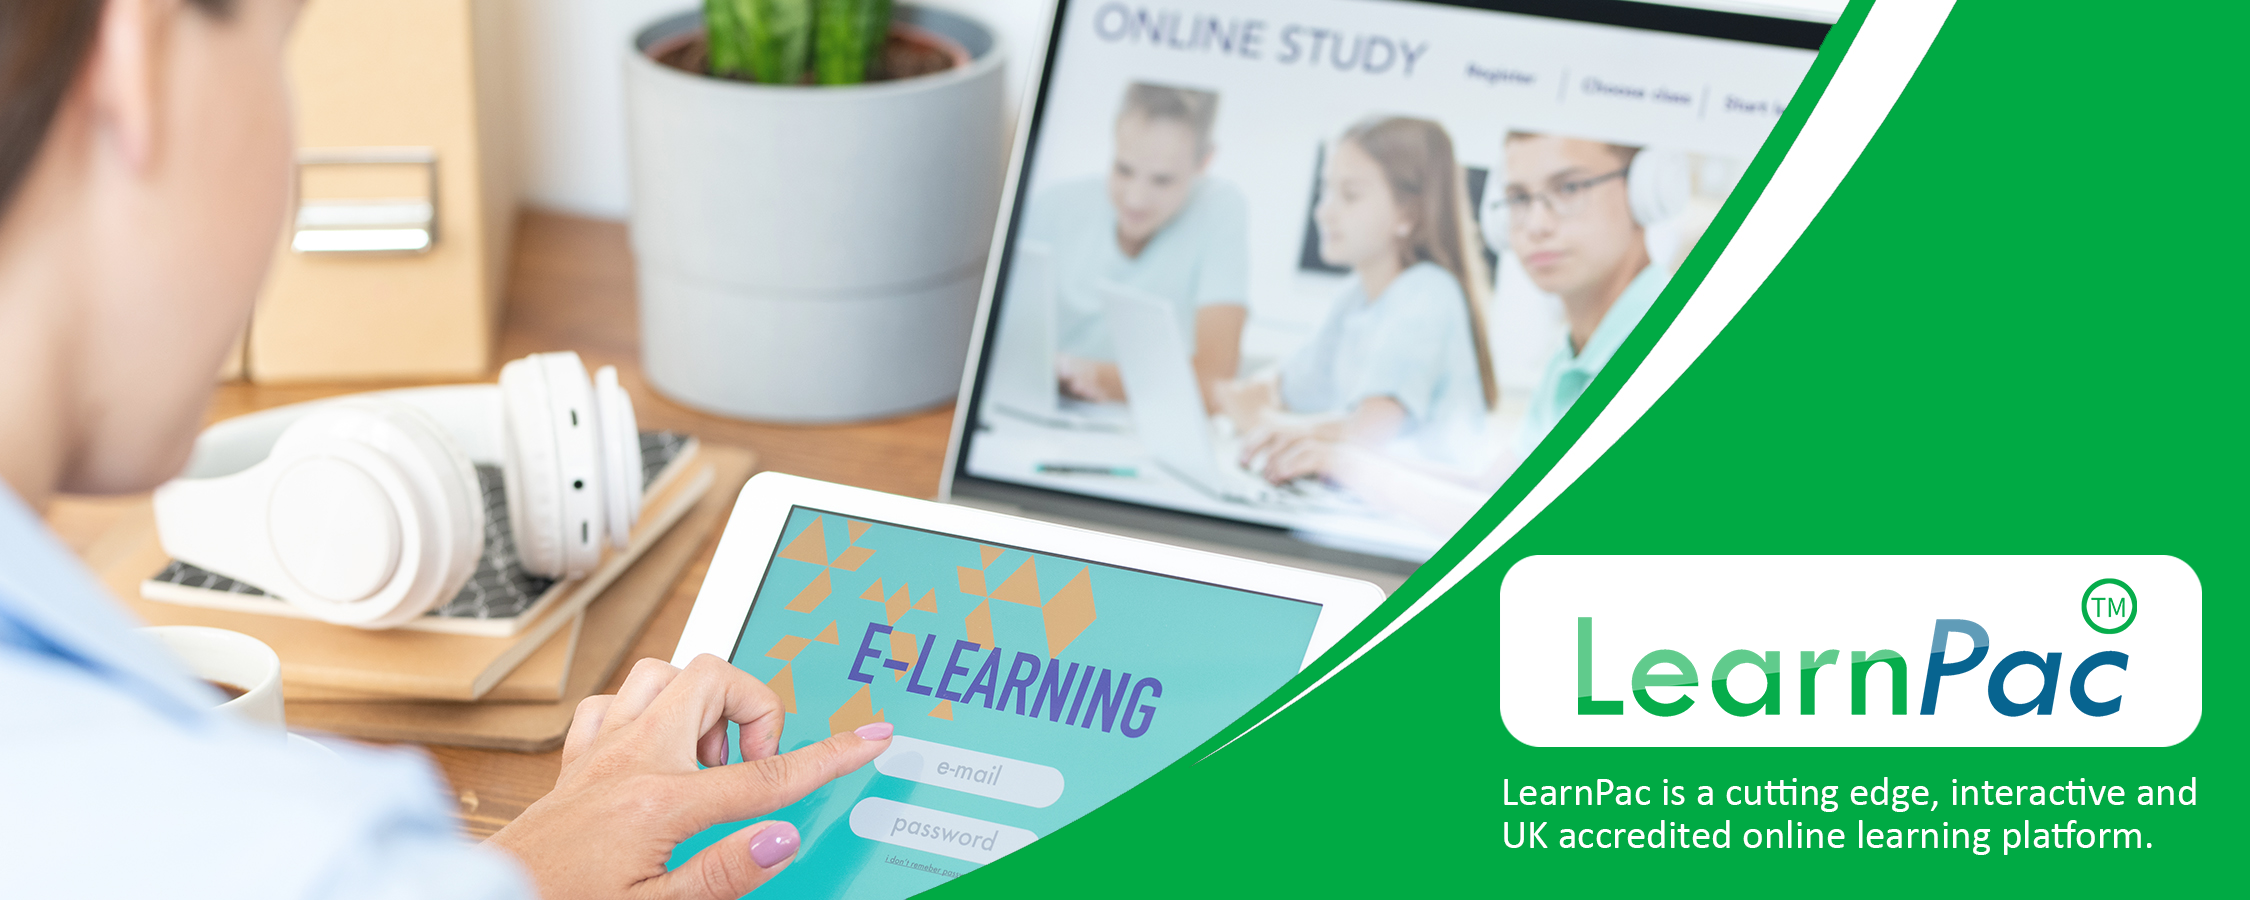 Self-Leadership Training - Online Learning Courses - E-Learning Courses - LearnPac Systems UK -